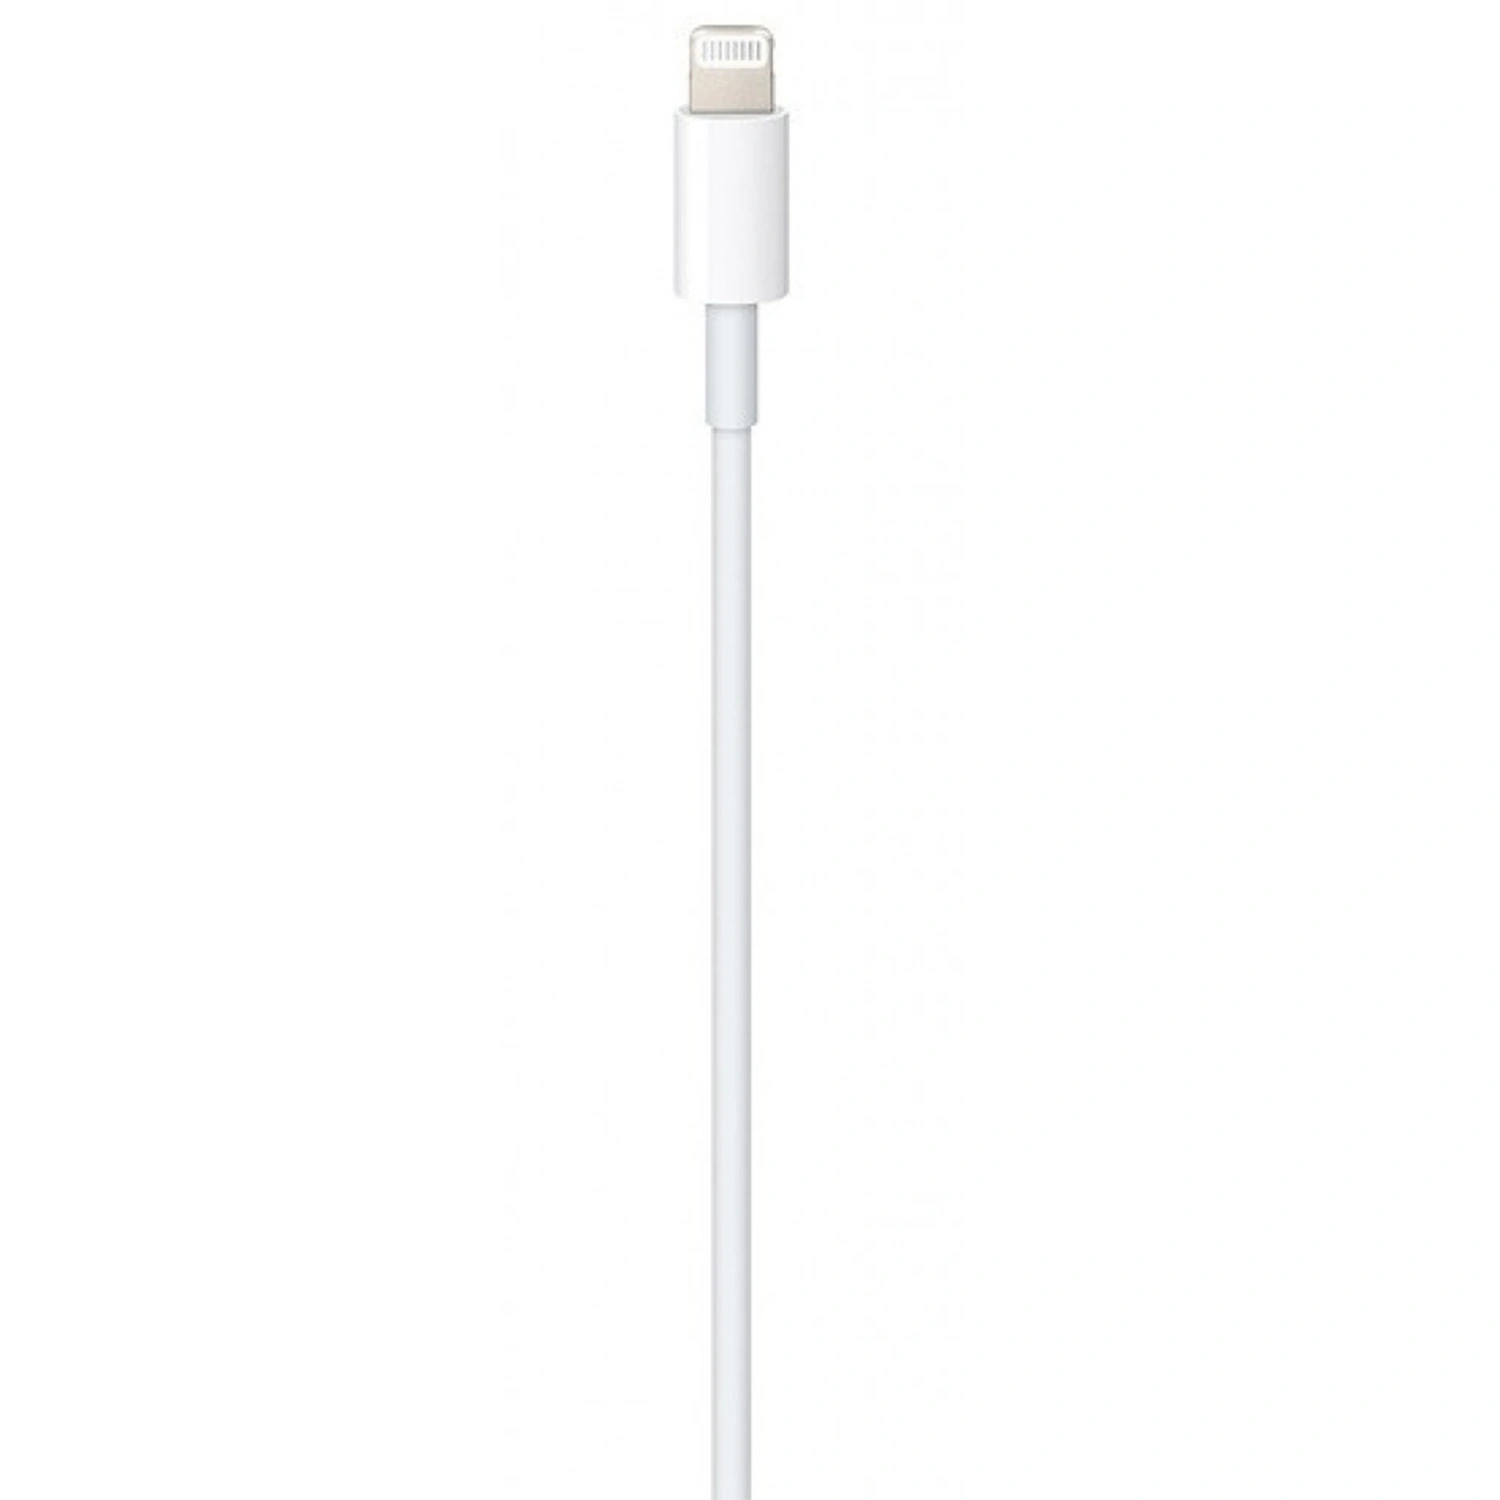 Наушники apple type c. Кабель Apple USB Type-c - Lightning (mqgj2zm/a) 1 м. Apple кабель USB-C/Lightning 2 м. Кабель Apple USB - Lightning mxly2zm/a (1 метр). Кабель Apple USB - Lightning (md819zm/a) 2 м.